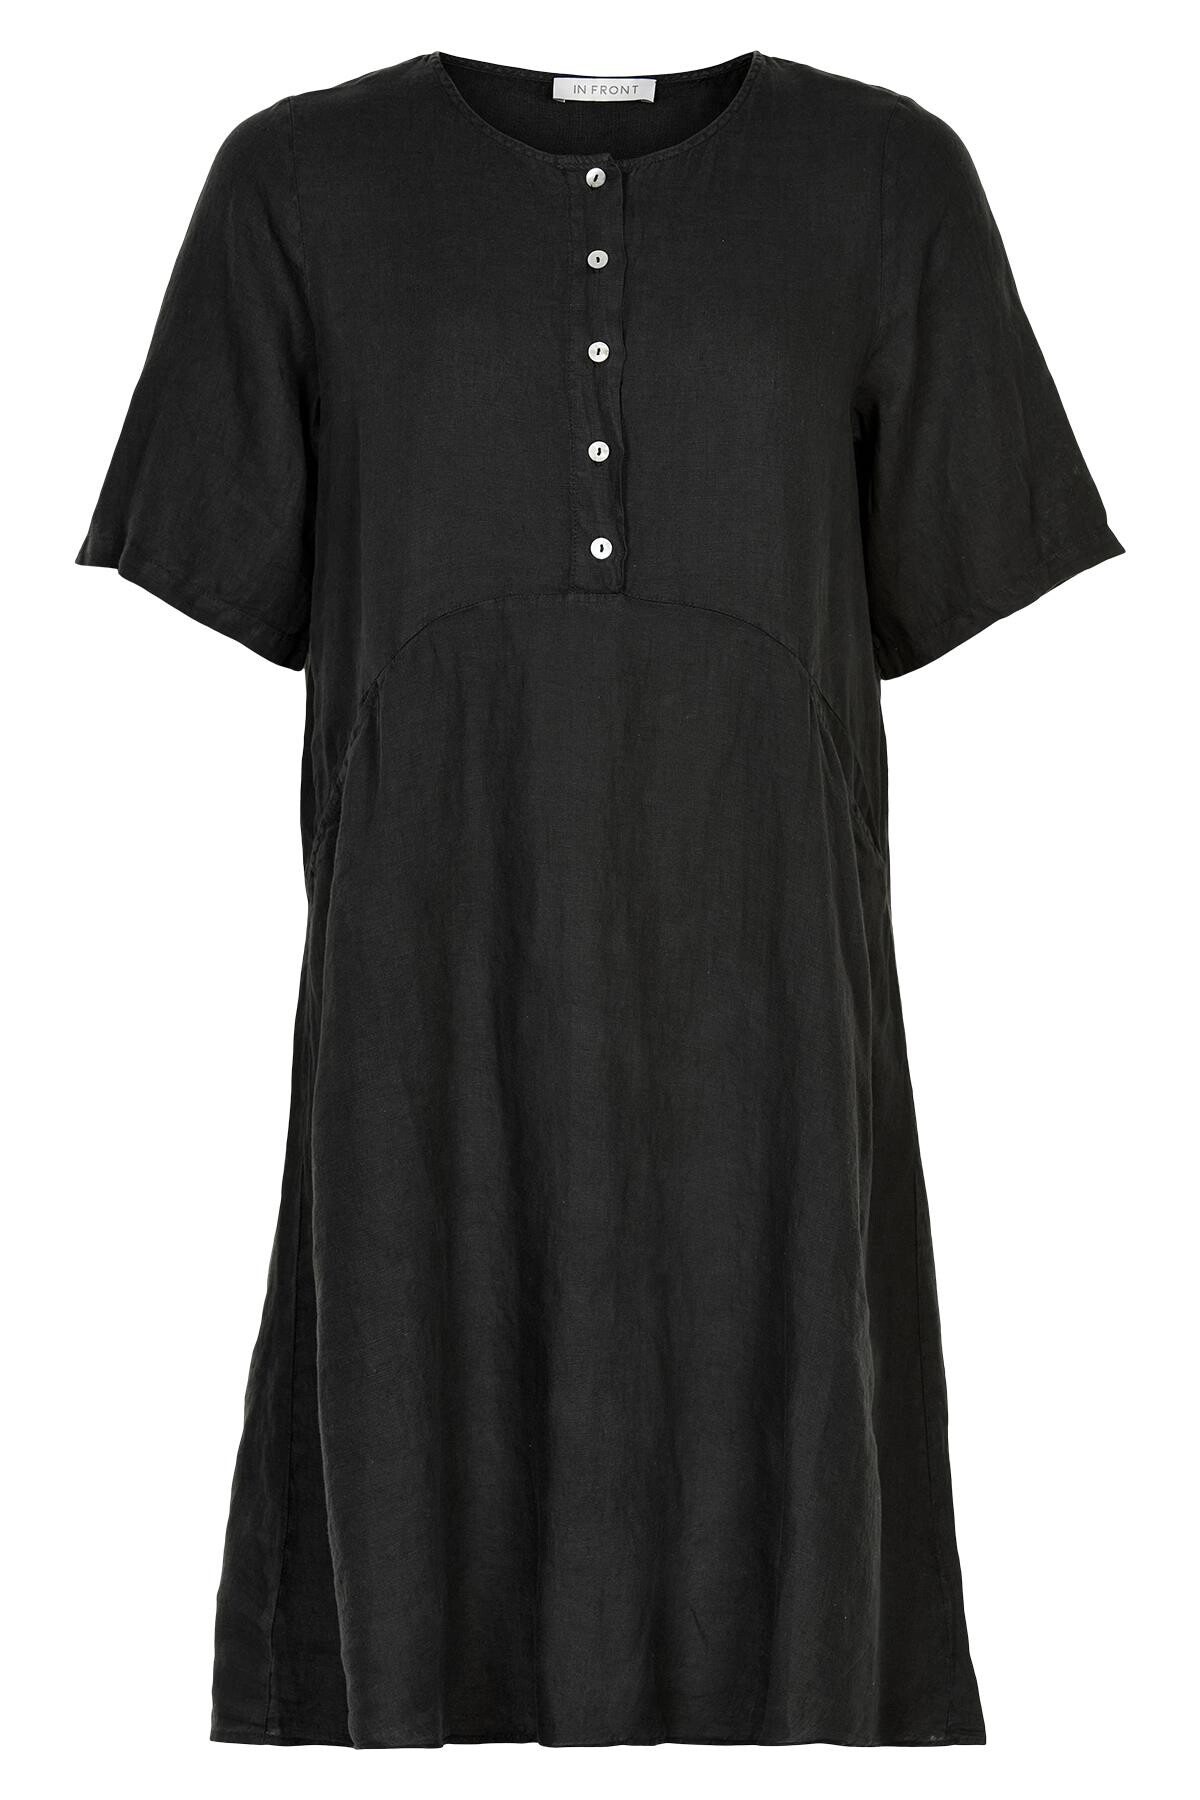 IN FRONT LINO DRESS 15042 999 (Black 999, S)